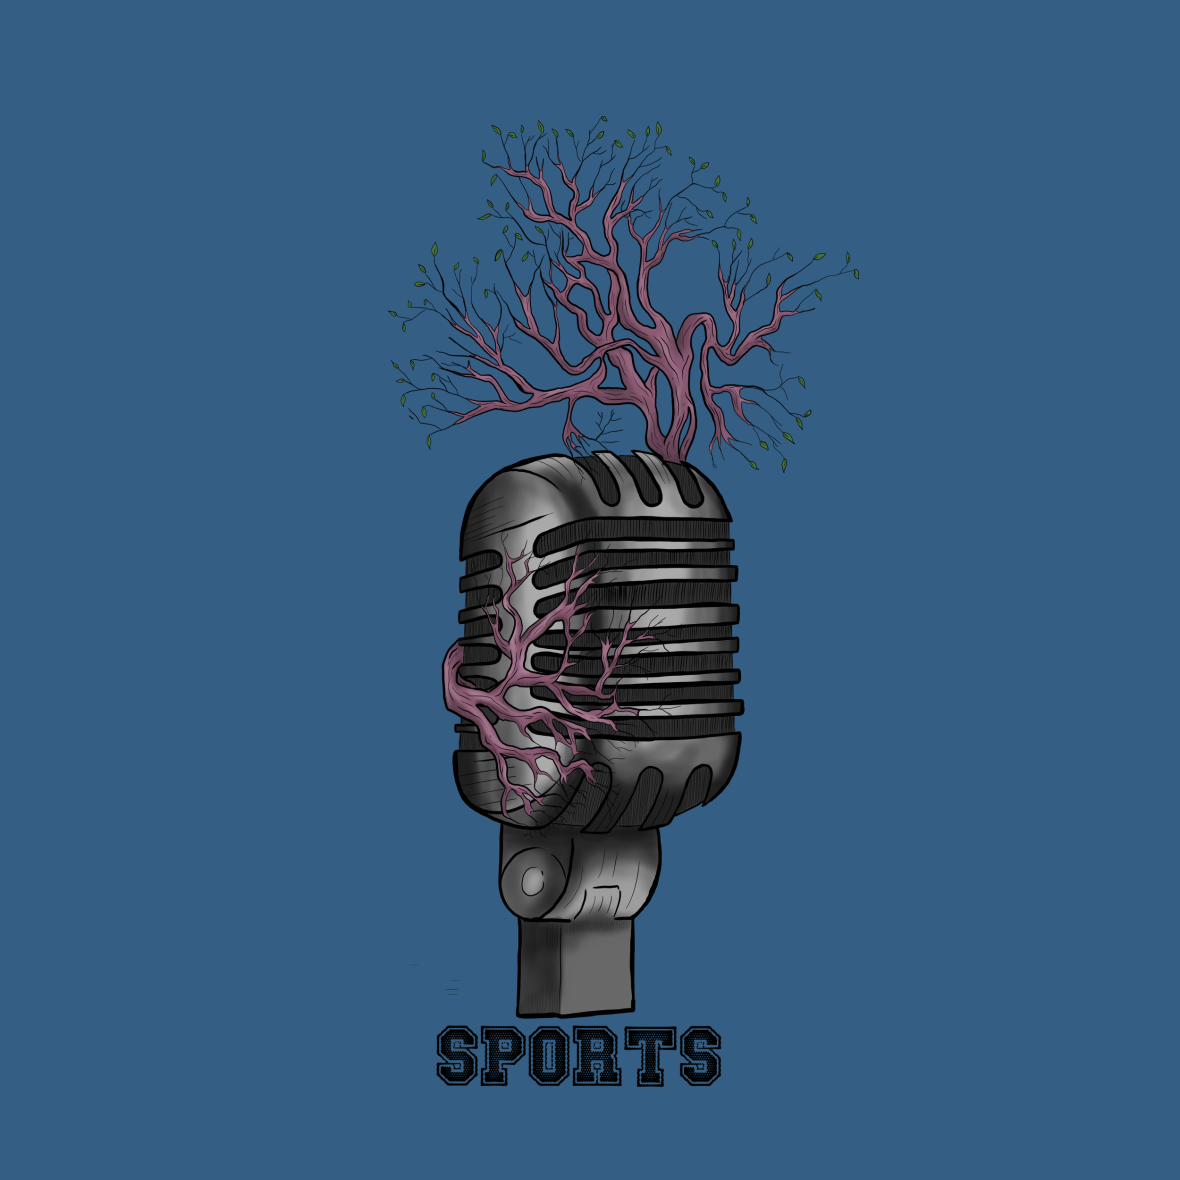 'Sports' - ISTAN Podcast